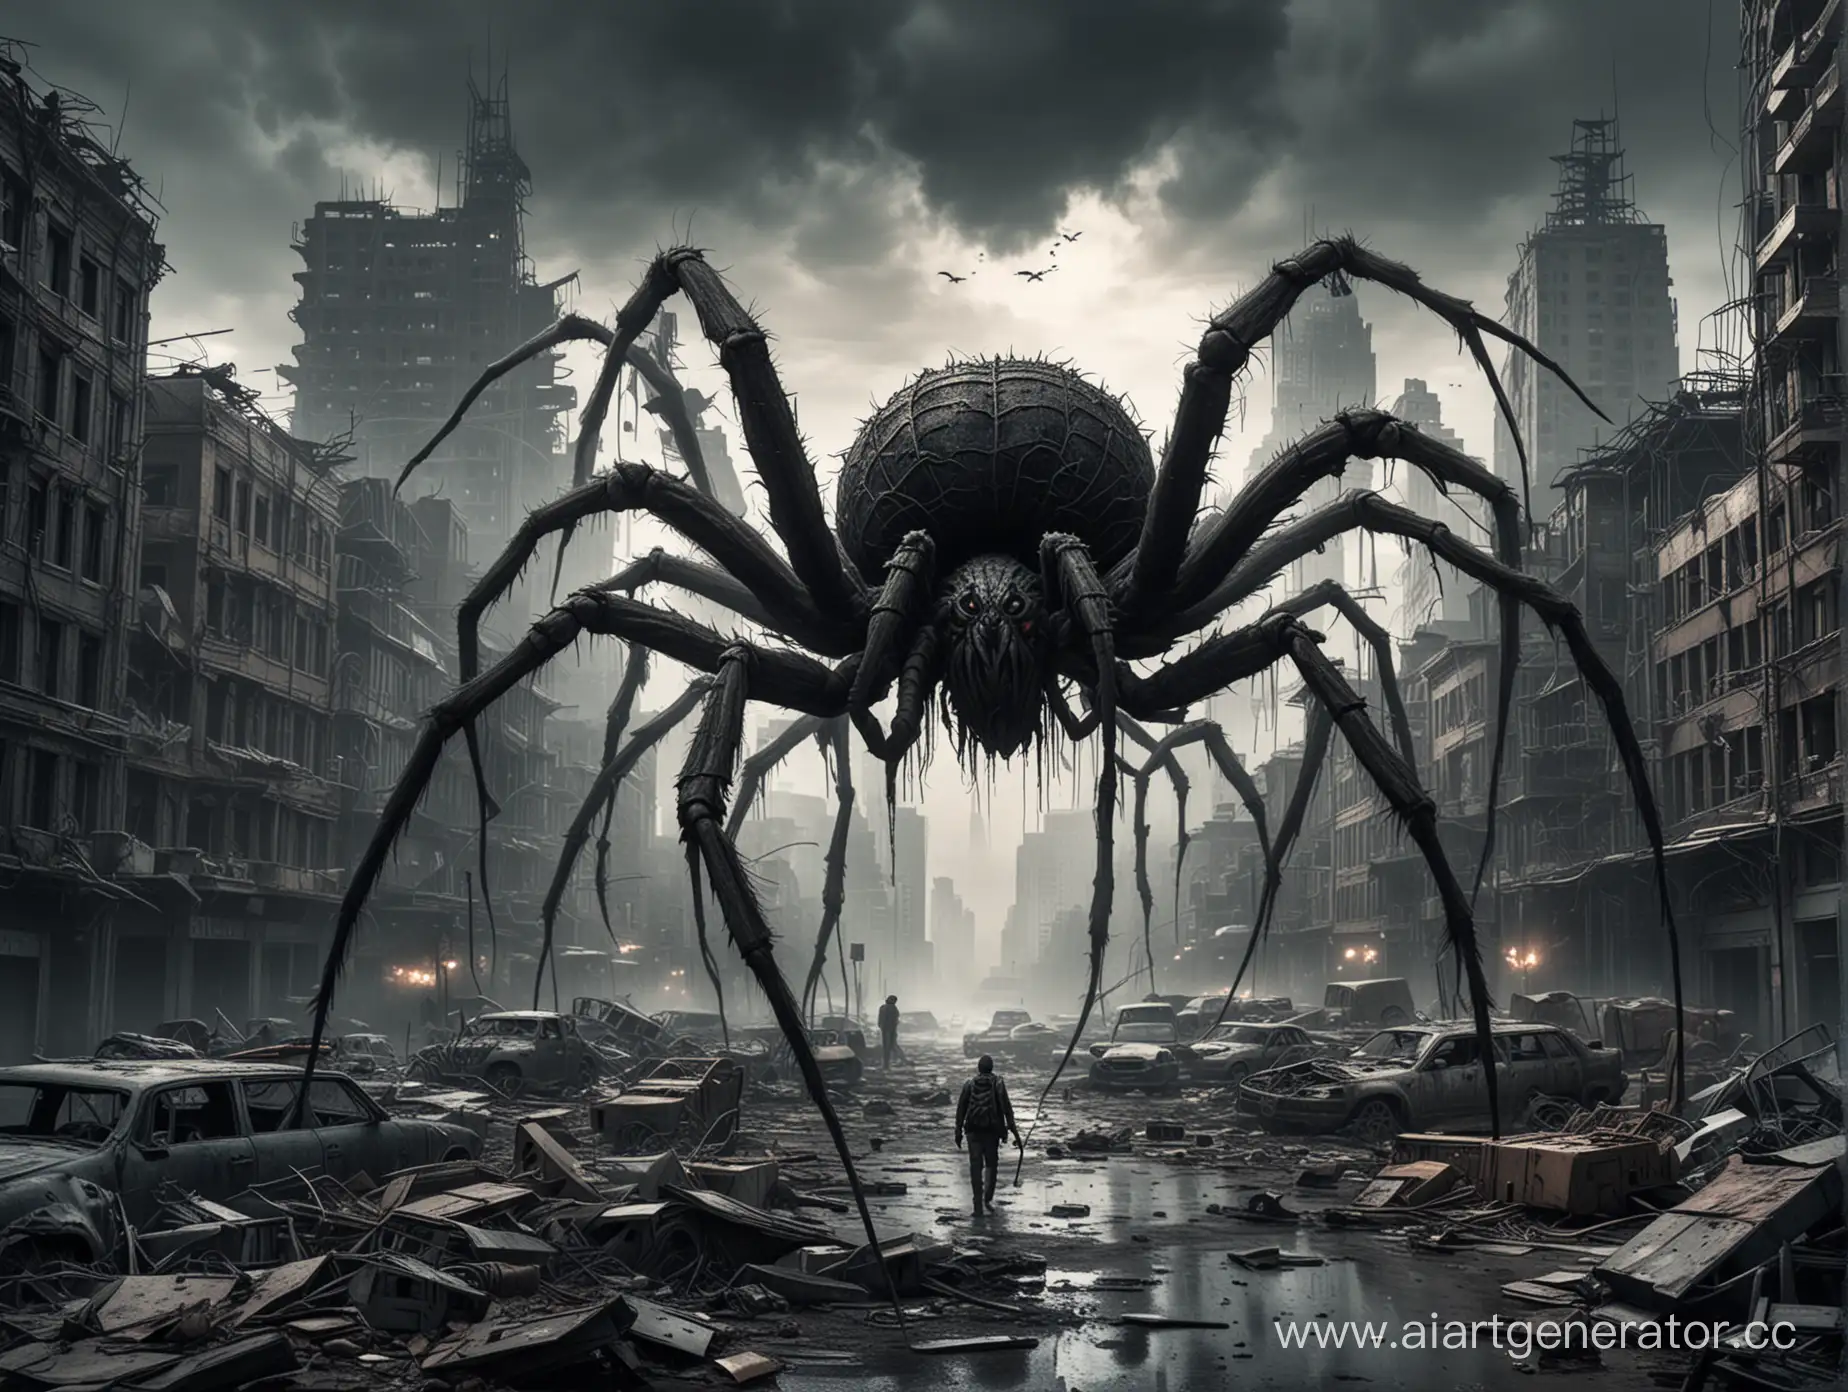 Gigantic-Spider-Rampaging-Through-PostApocalyptic-City-in-Dark-Tones